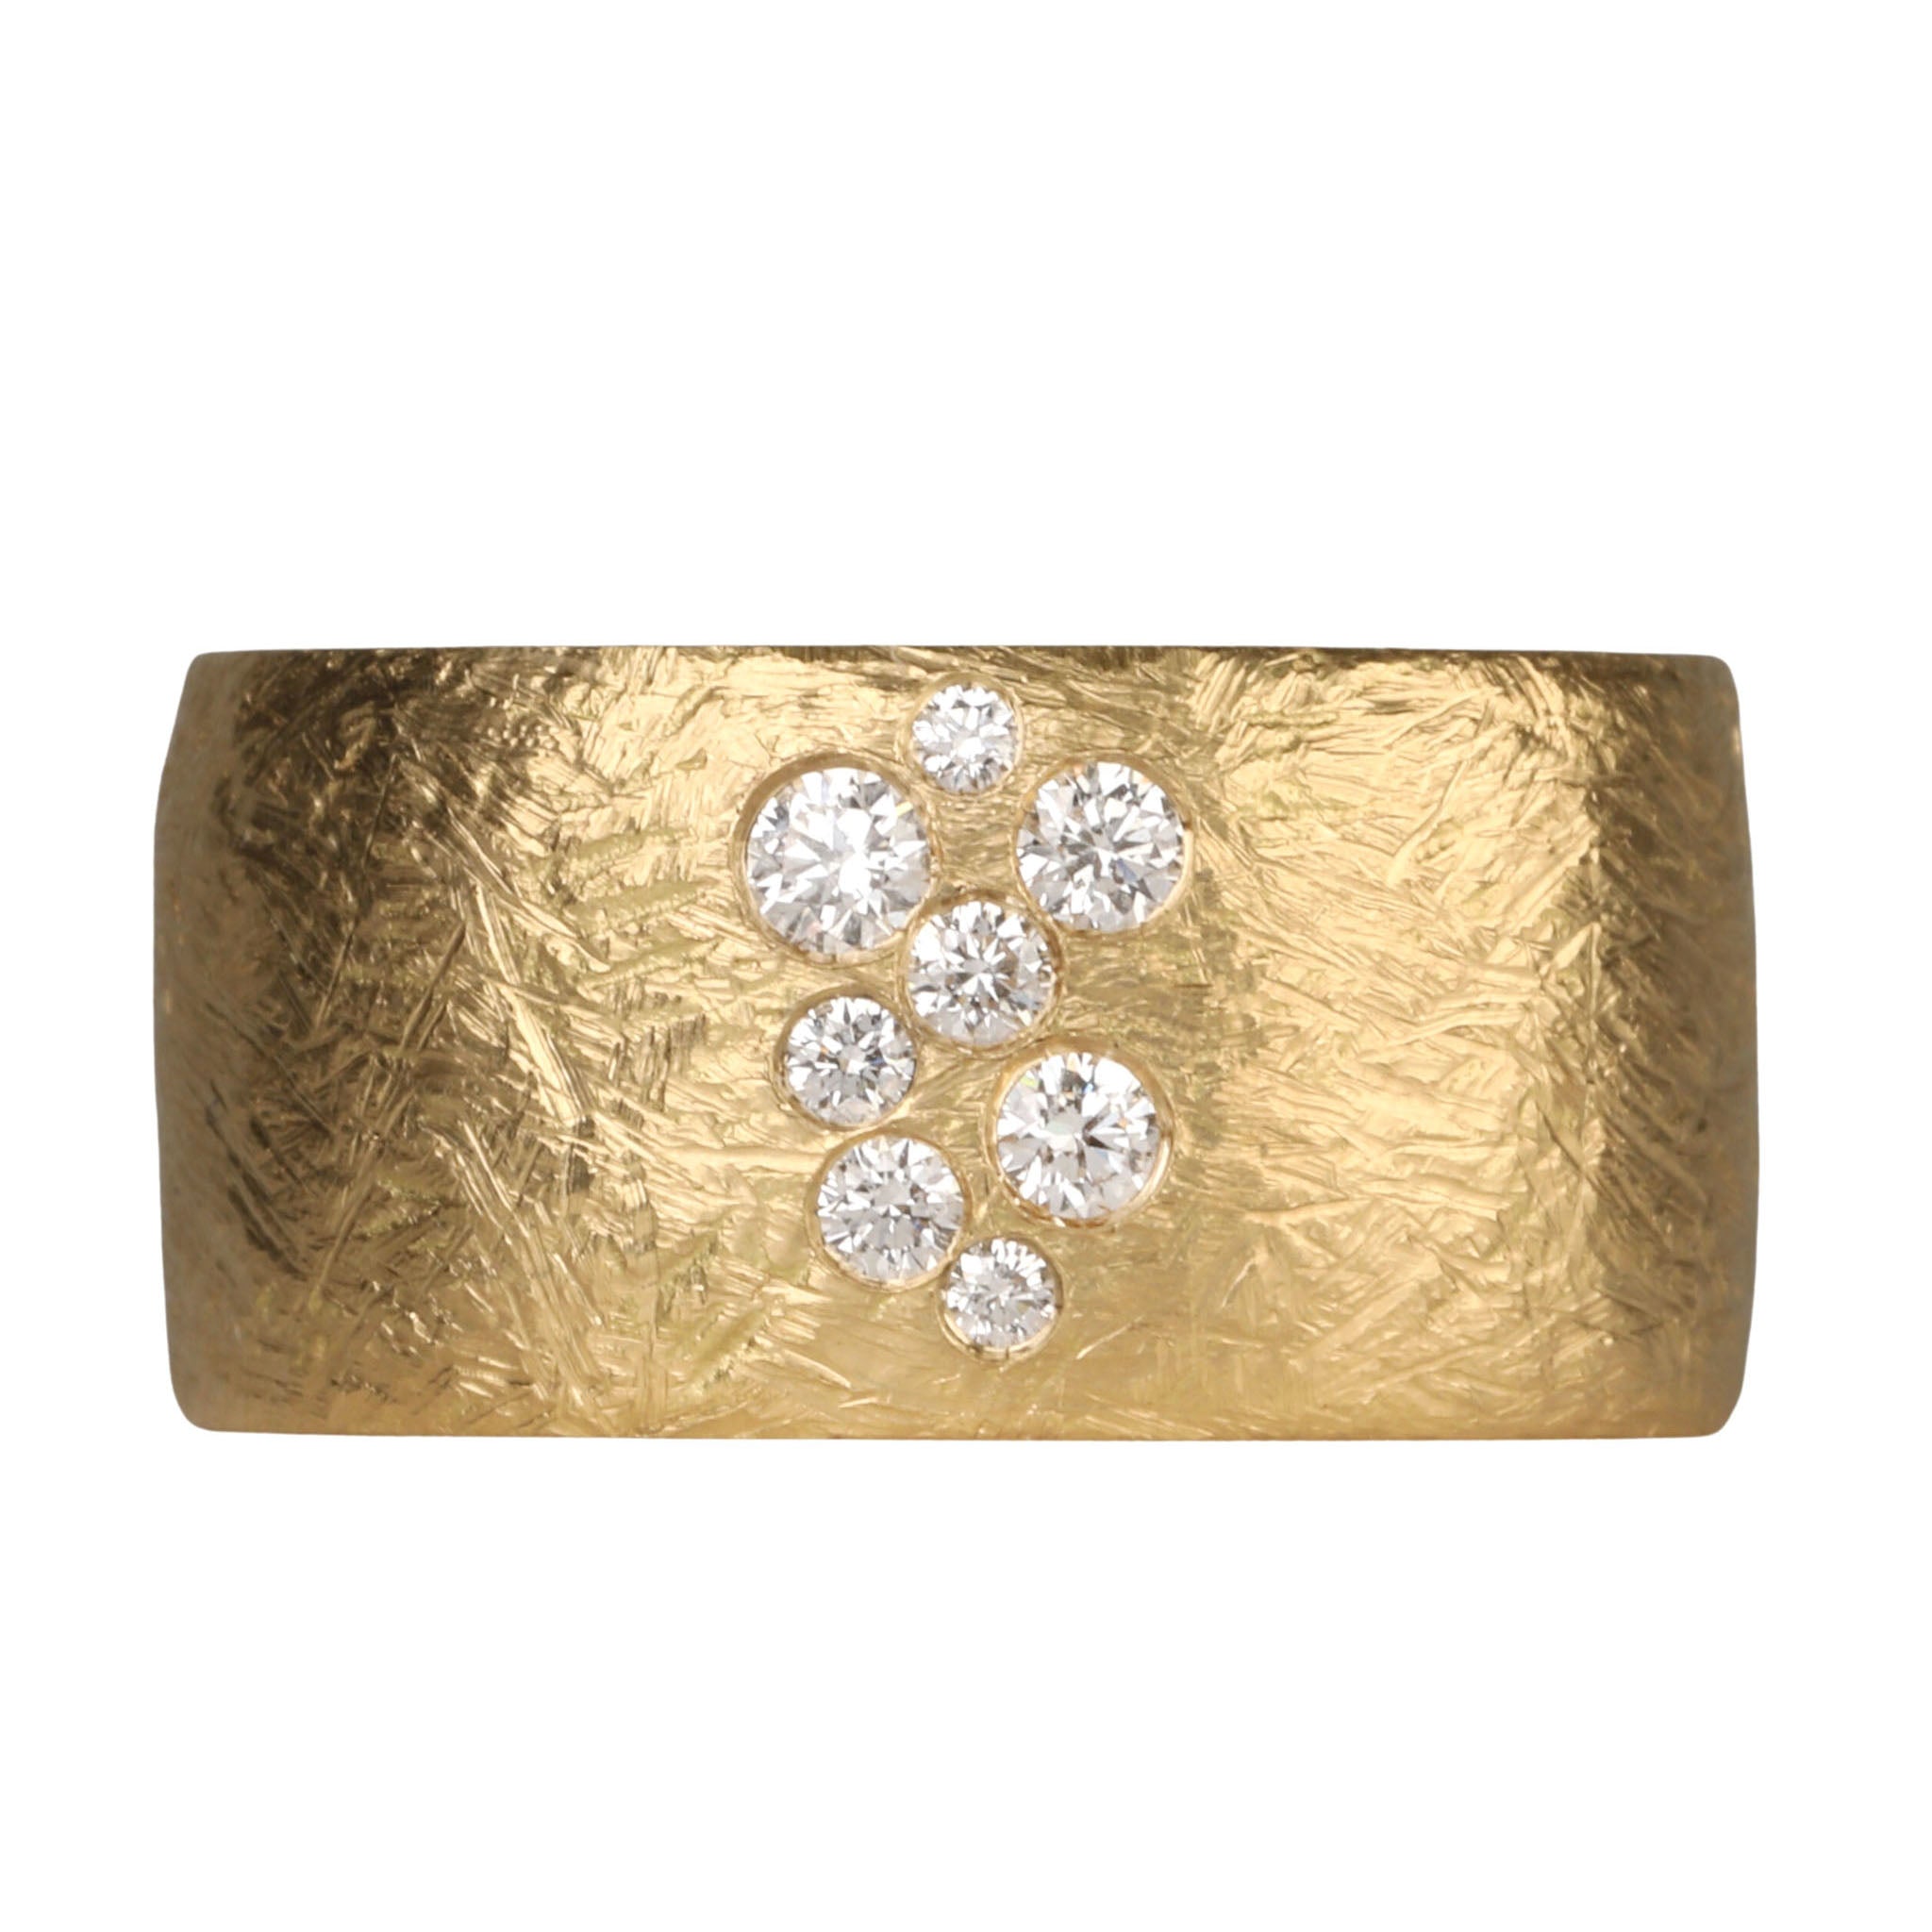 18K Gold Cigar Band with Diamond Inlay "Constellation" Motif - Peridot Fine Jewelry - Anne Sportun